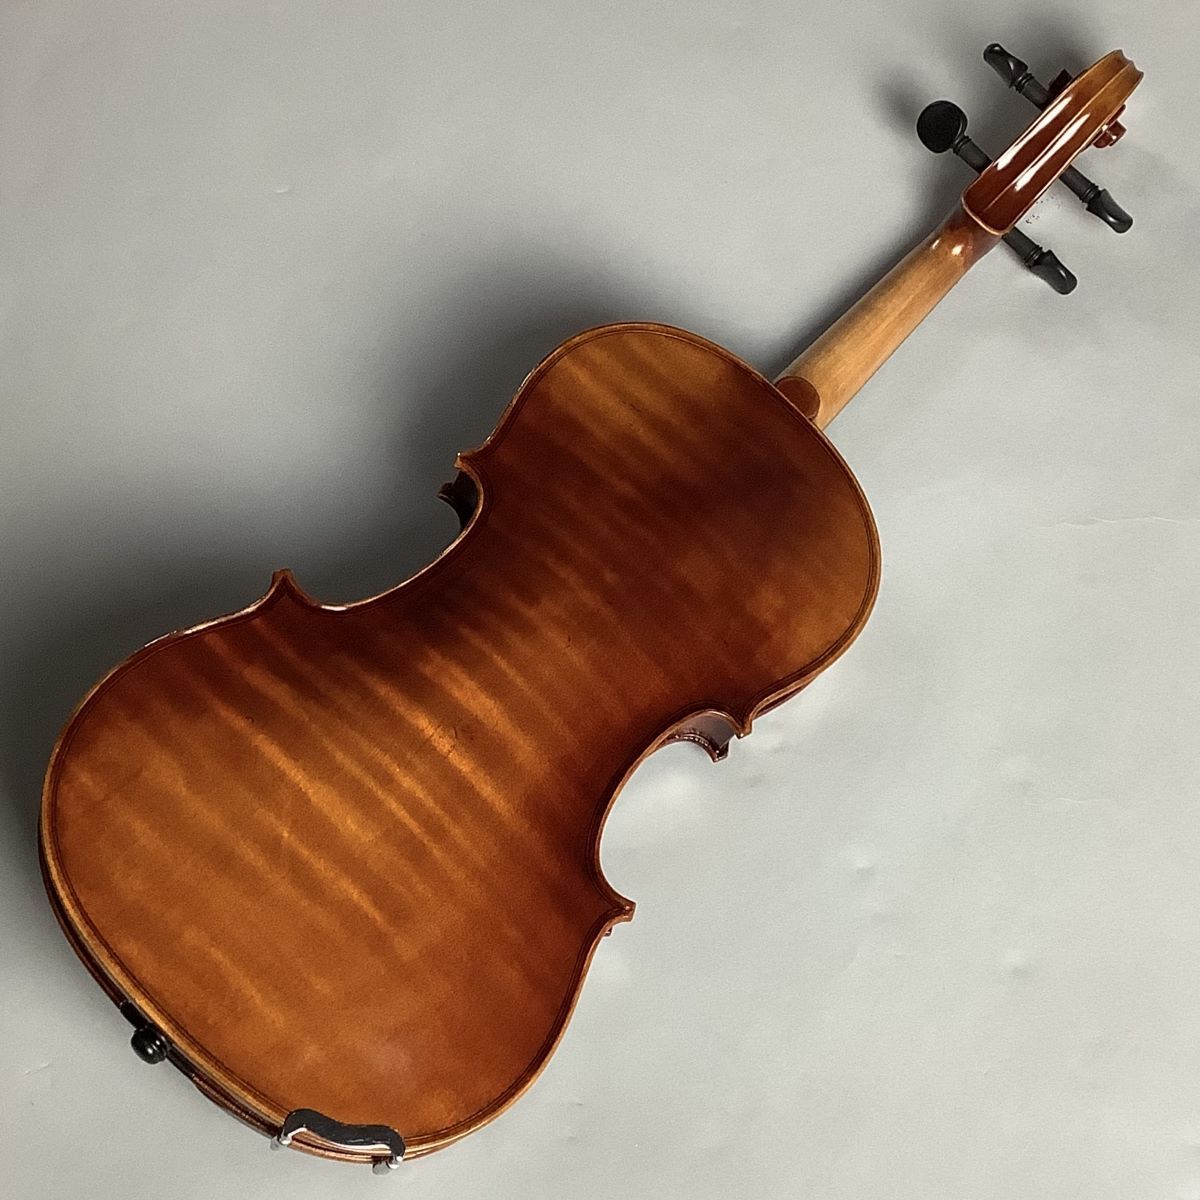 GEWA Meister II バイオリン セット サイズ ケースカラー：ブラウン